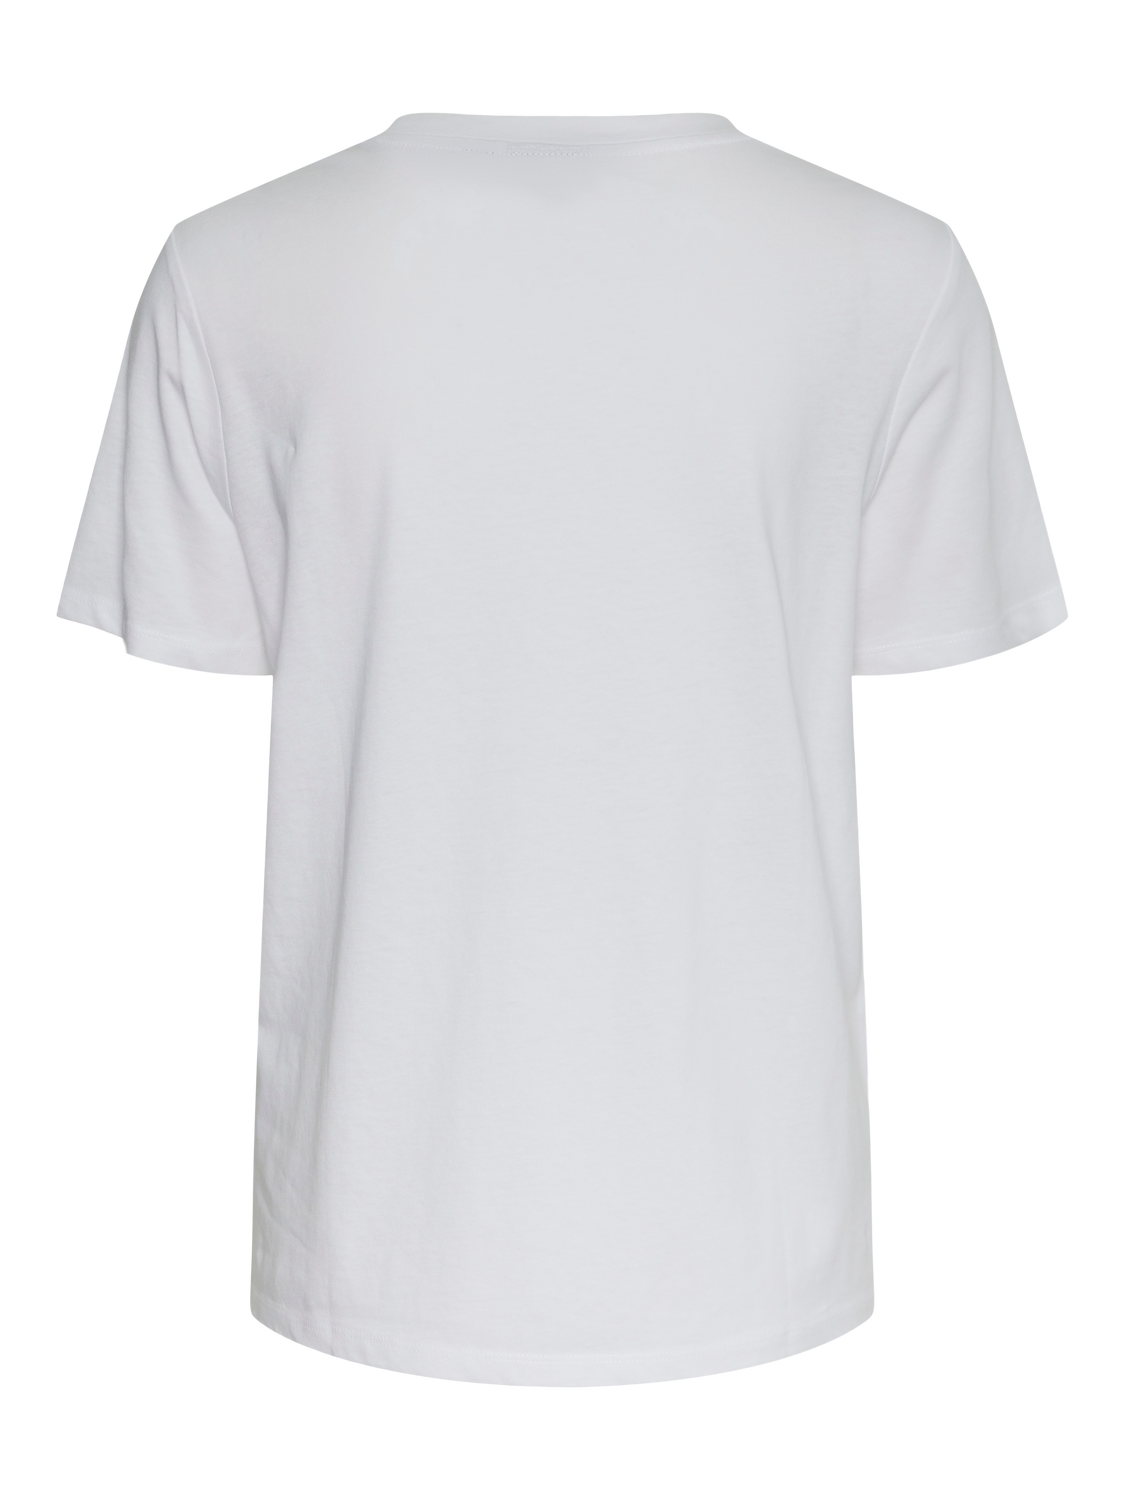 PCANITA T-Shirt - Bright White